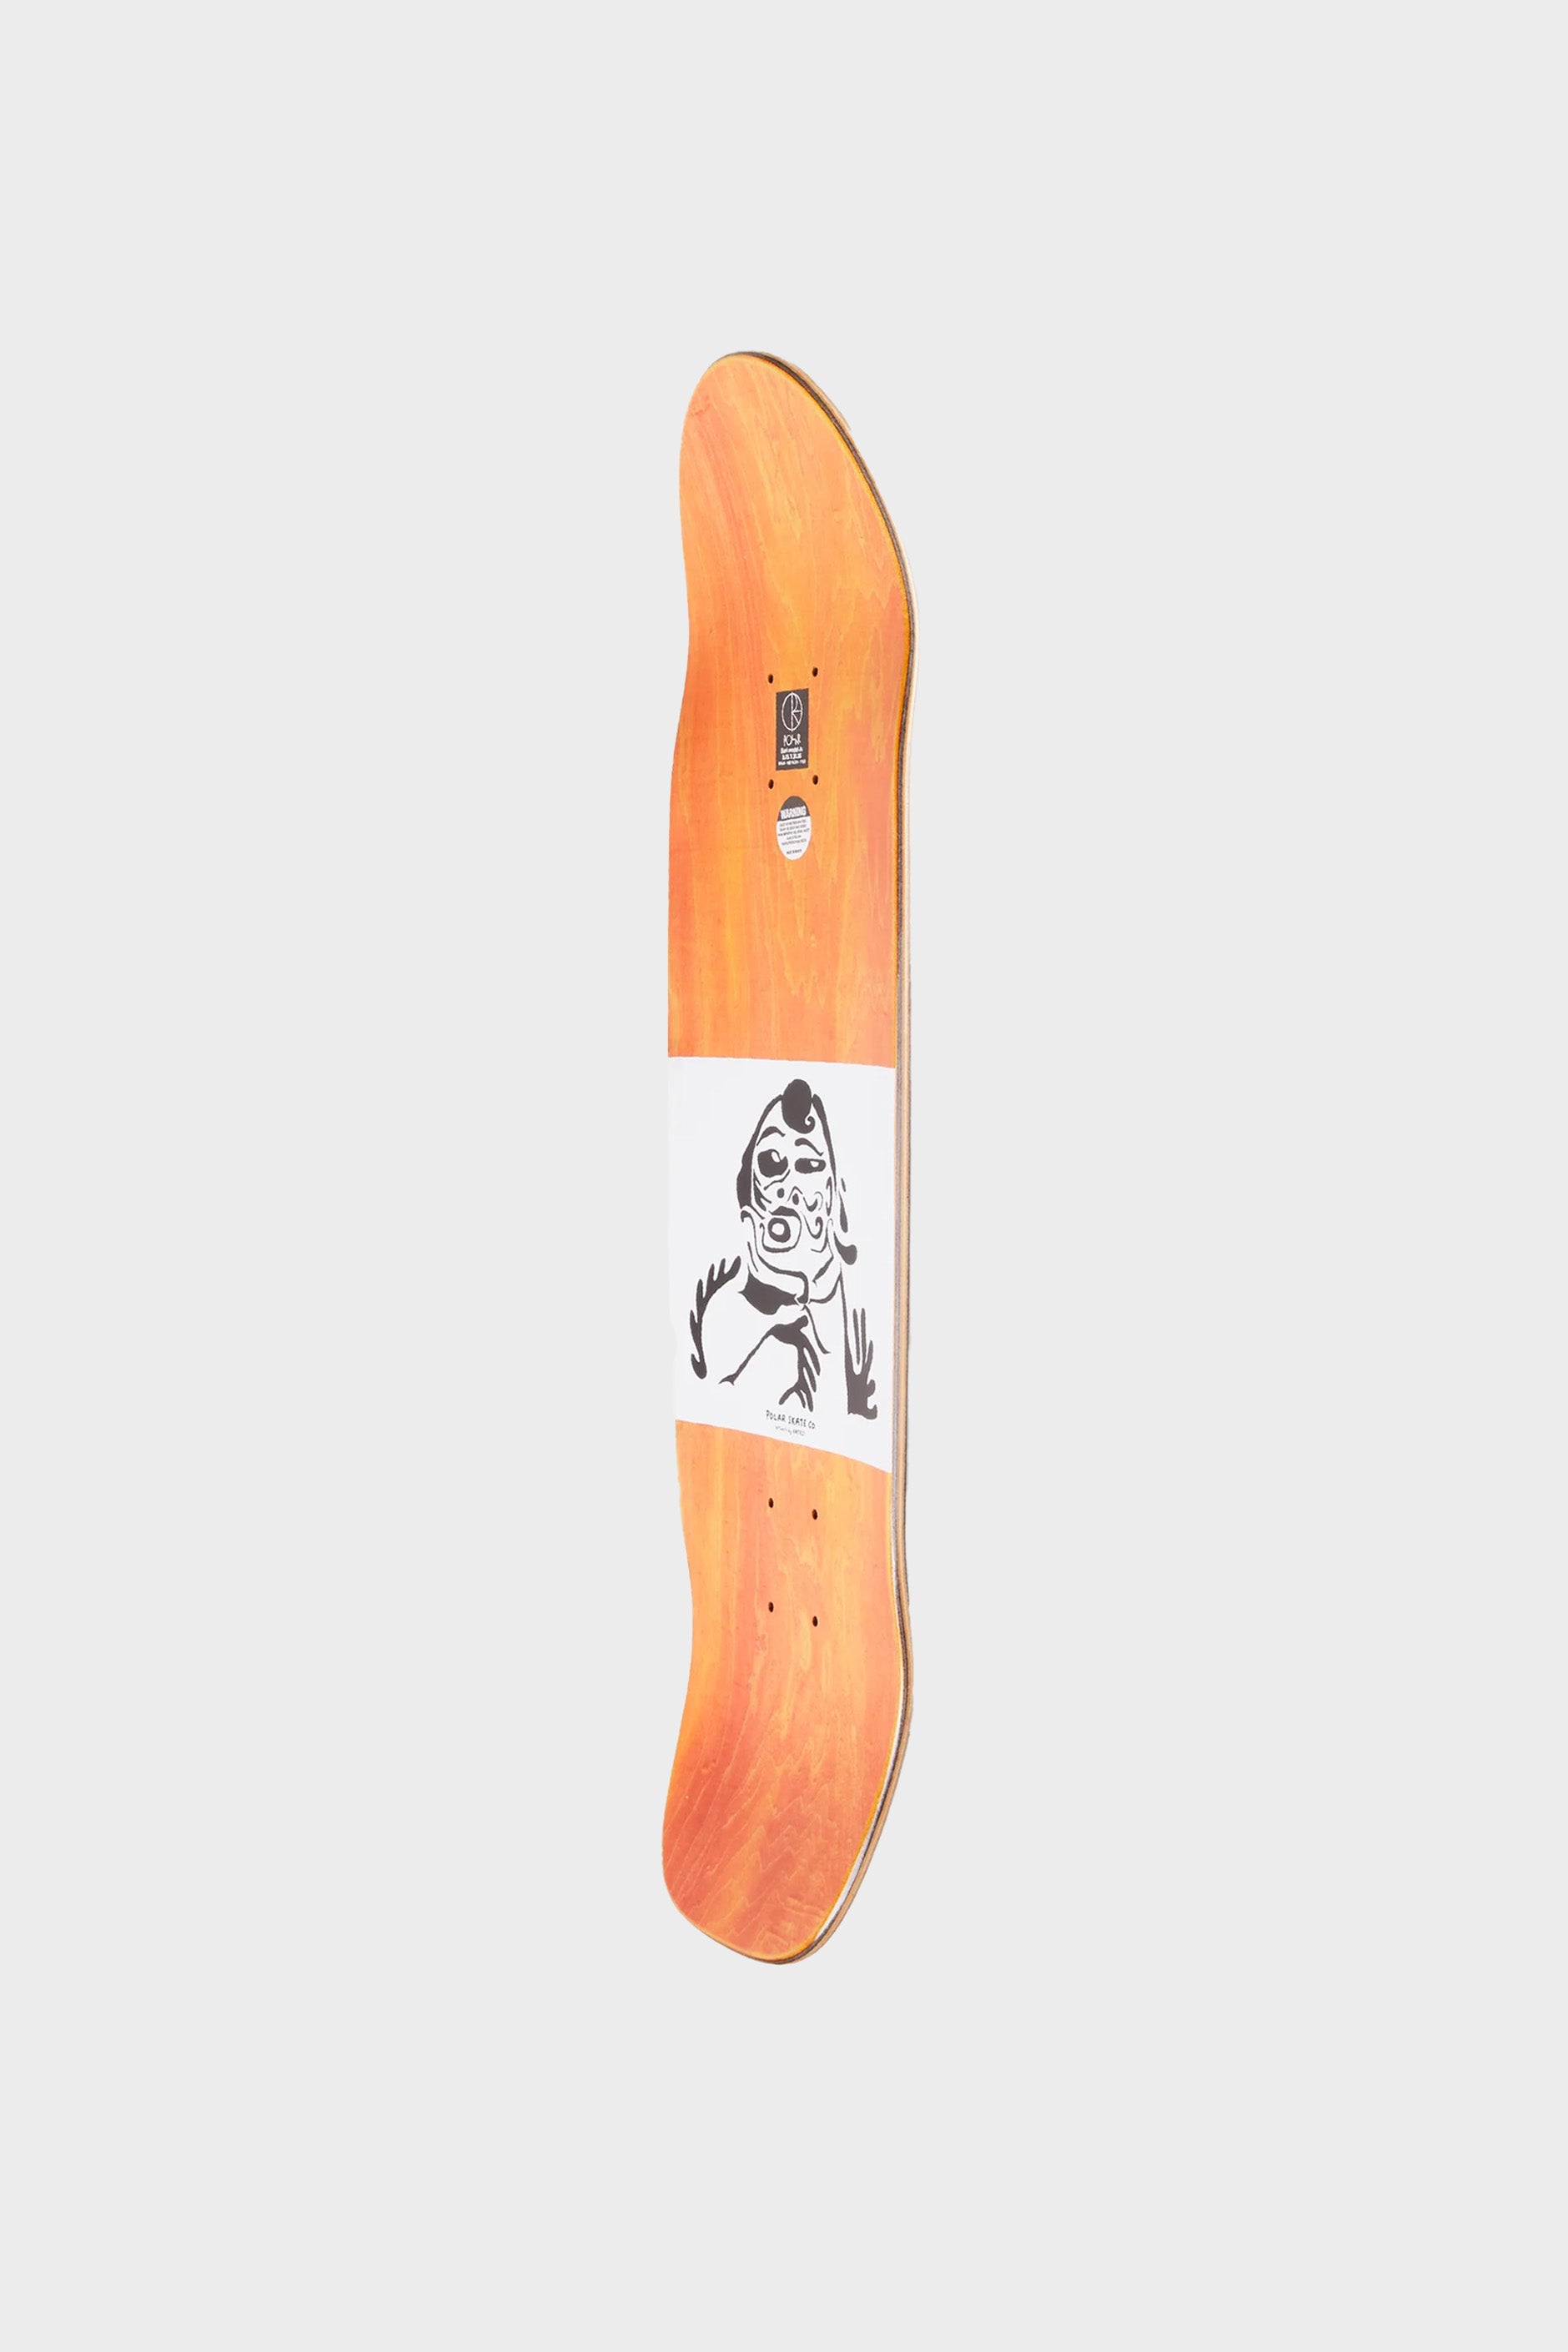 Selectshop FRAME - POLAR SKATE CO. Shin Sanbongi - Throphy Heads "SURF JR" Deck Skate Concept Store Dubai